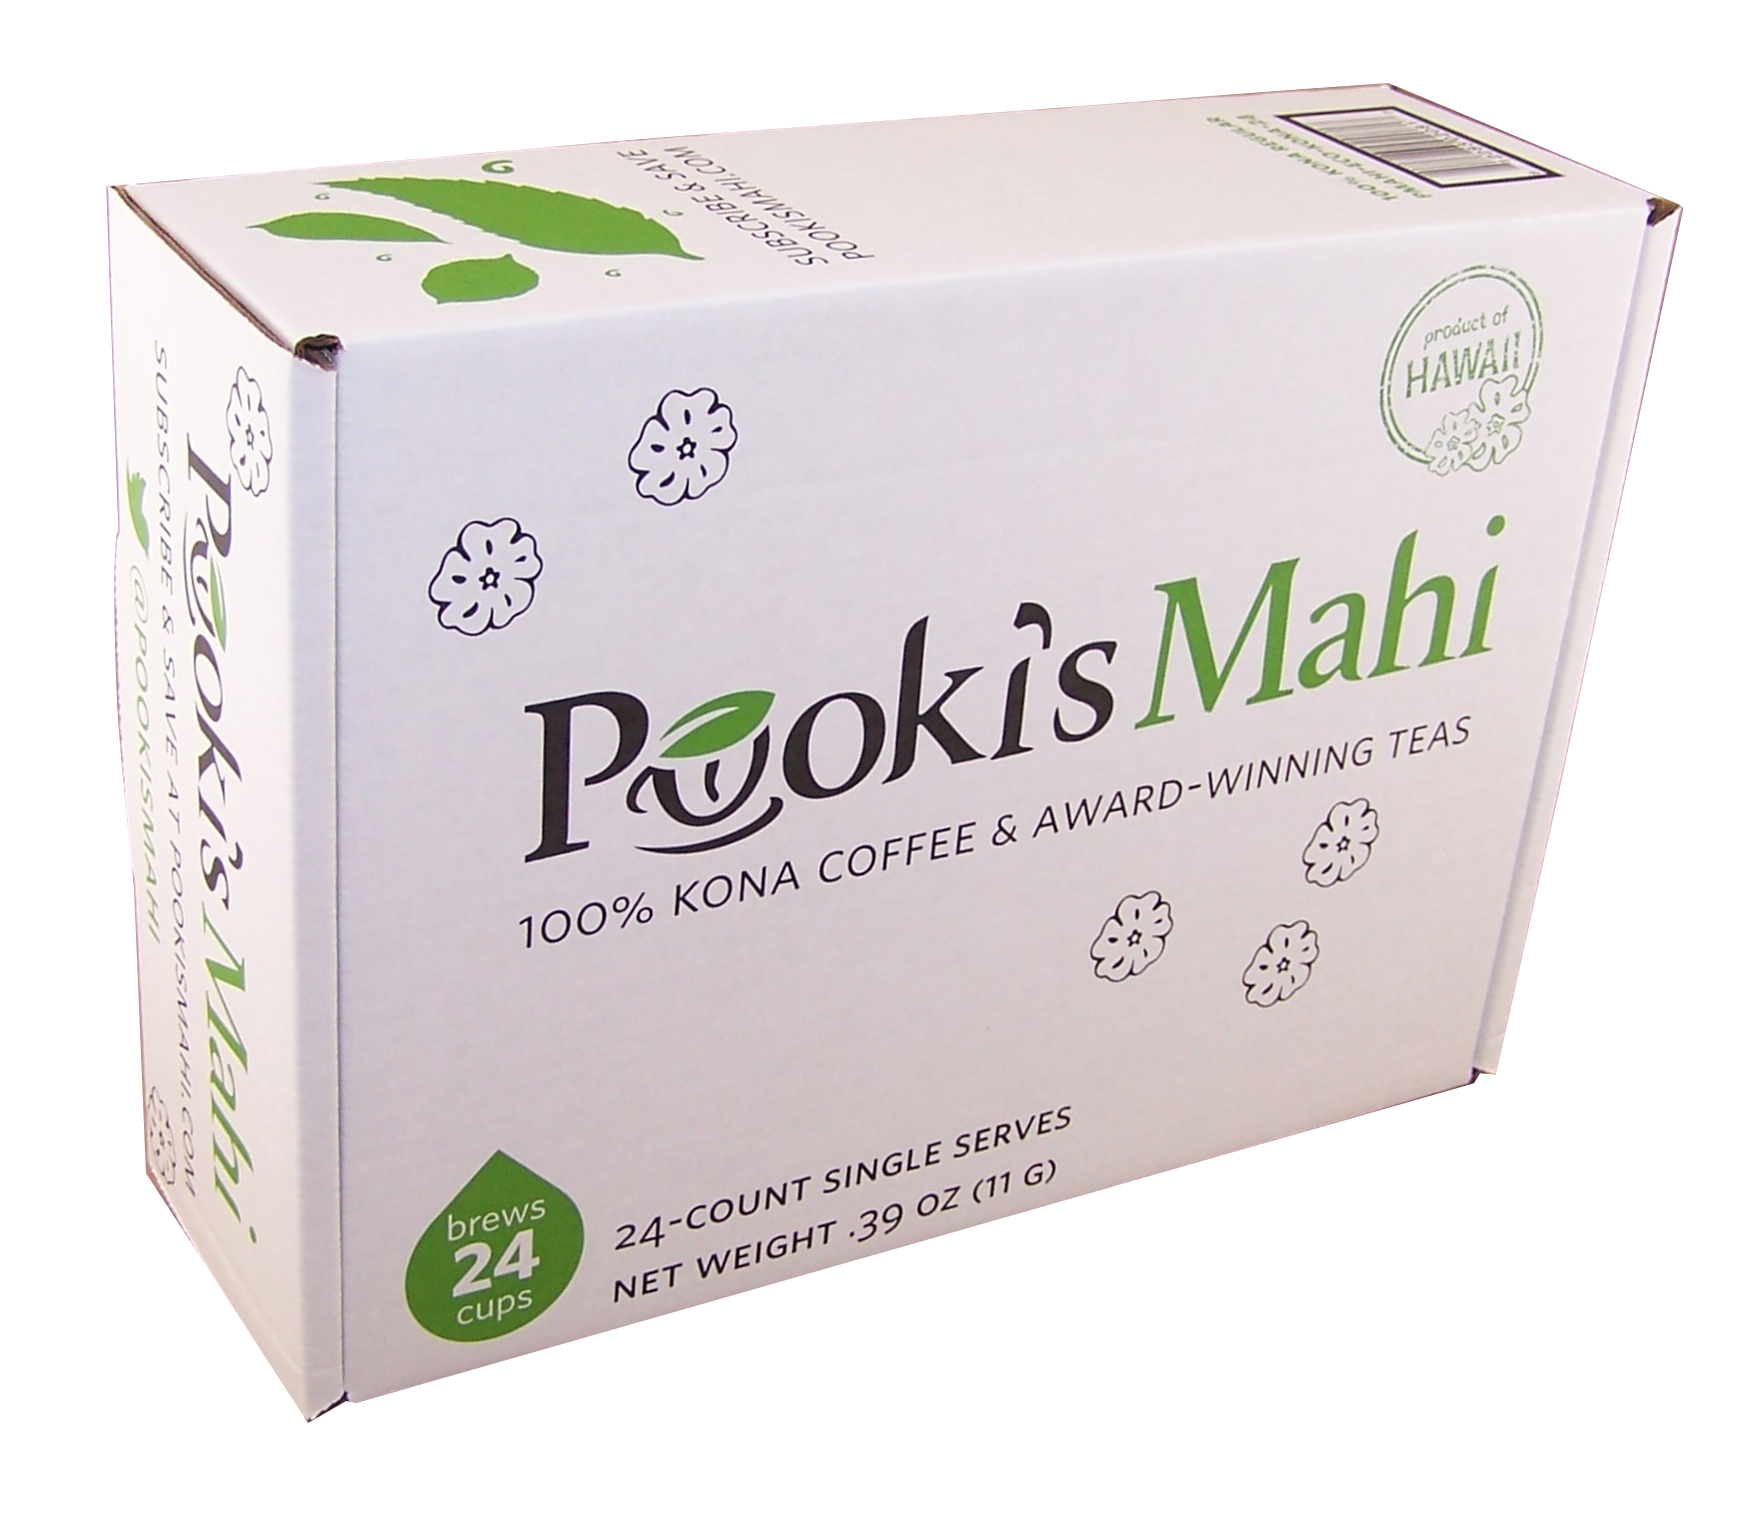 Pooki's Mahi's new environmentally packaging for 100% Kona coffee pods.